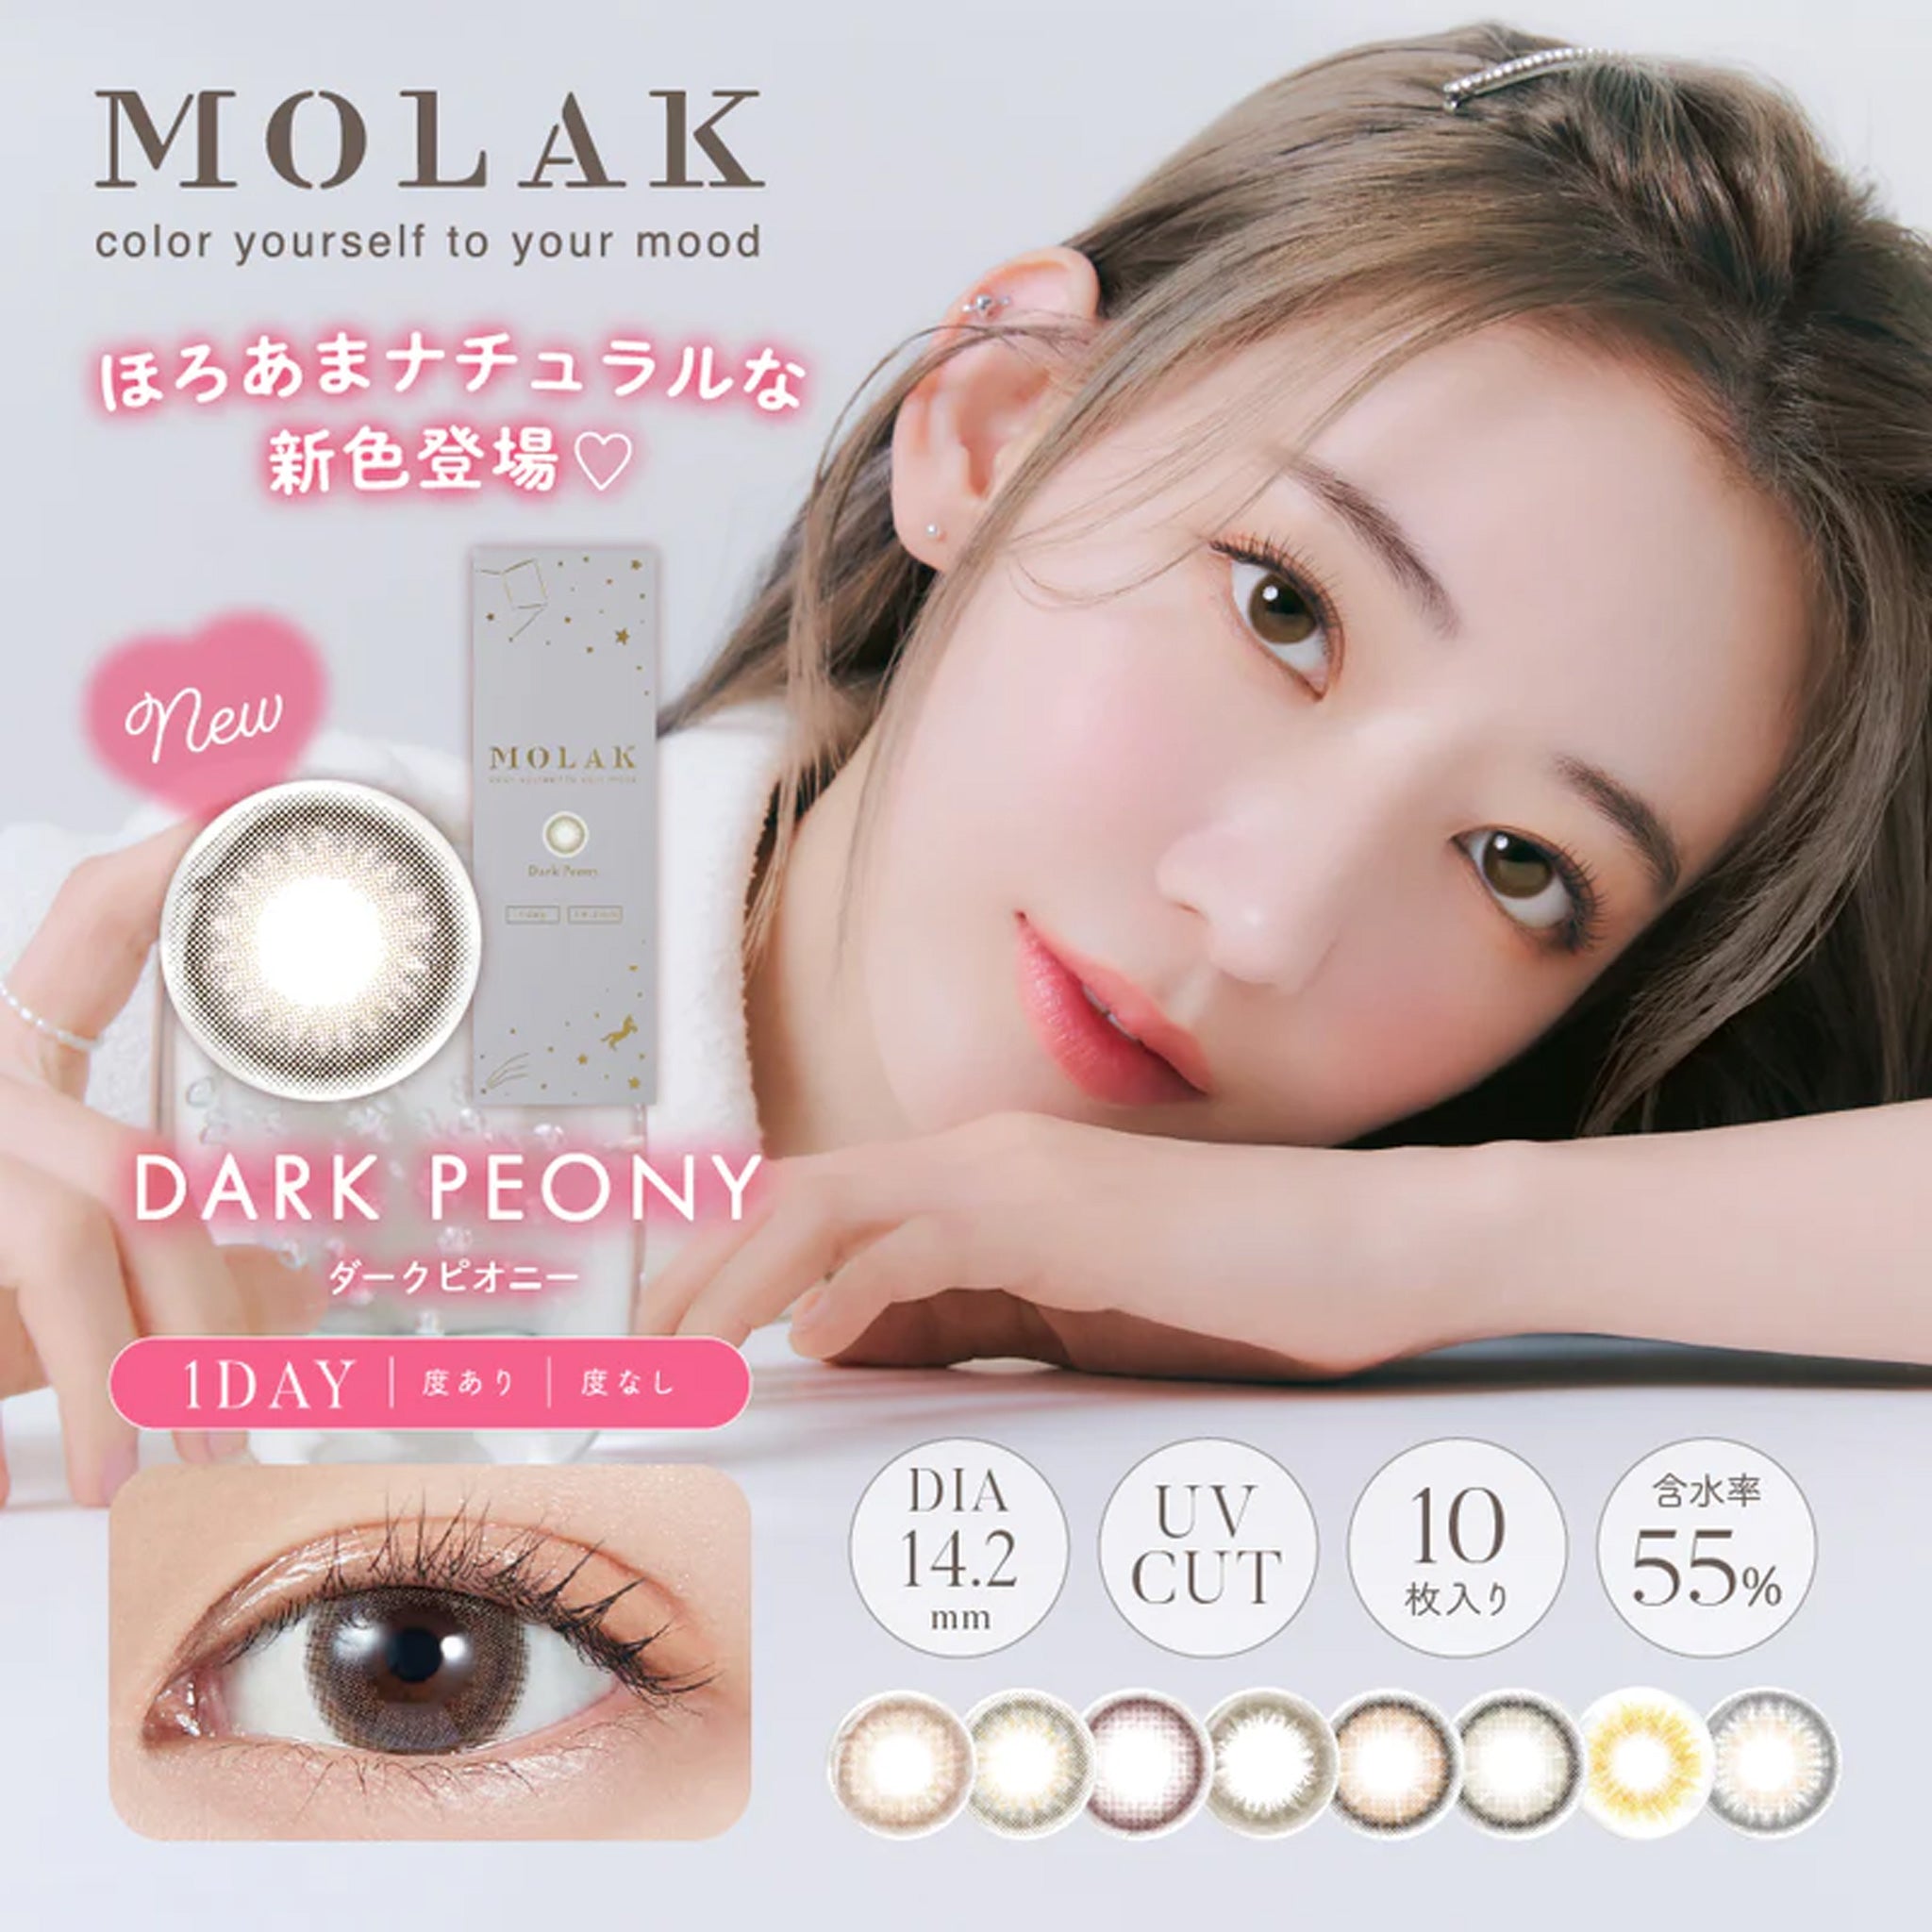 MOLAK Daily Contact Lenses-Tint Brown